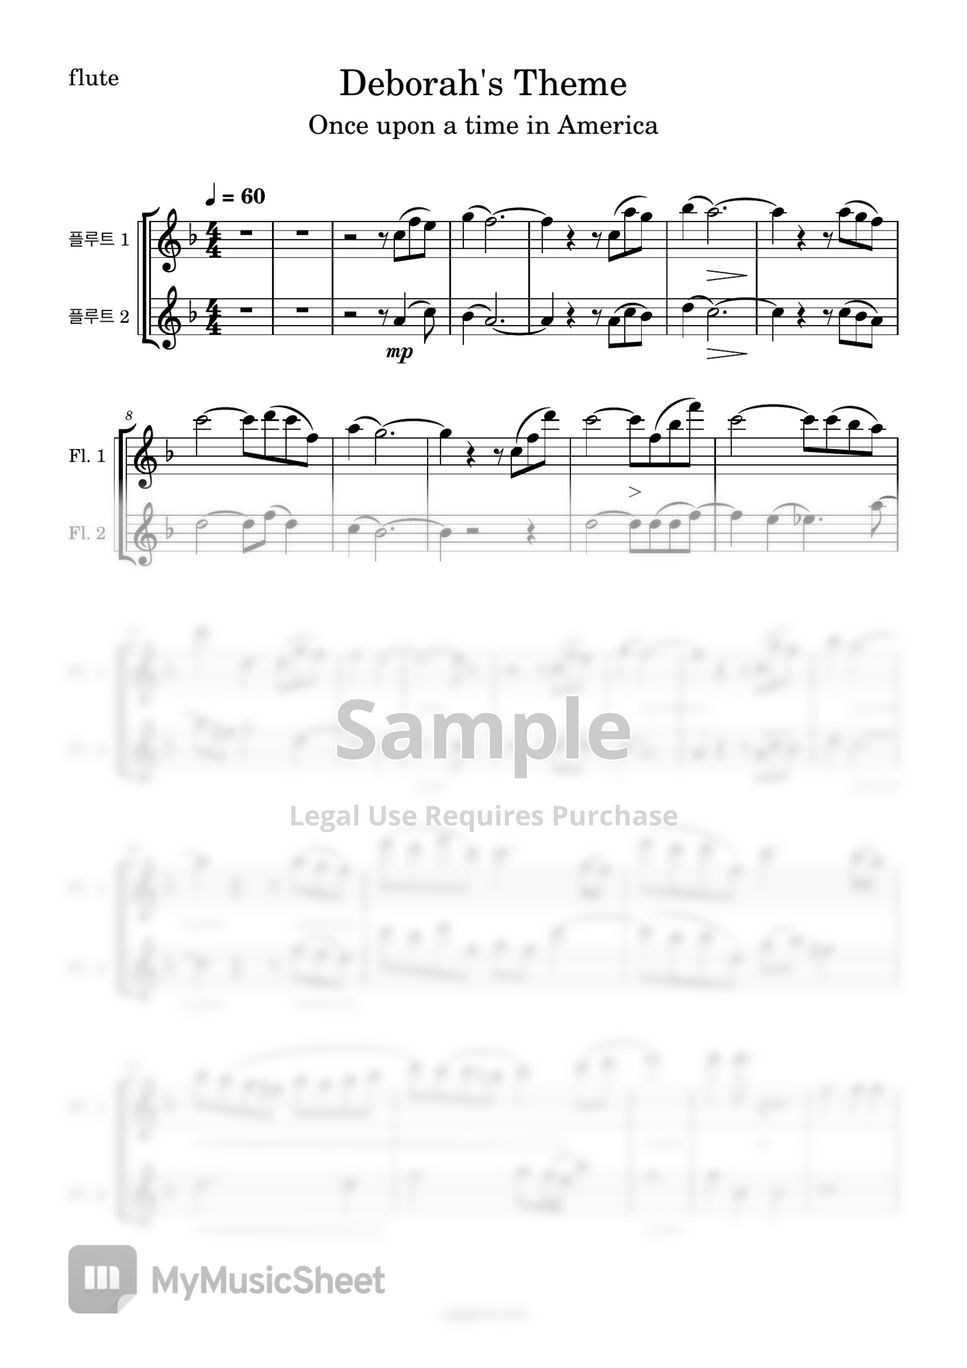 Ennio Morricone - Debora's Theme (Two flutes/반주MR/피아노악보) by simpleflutemusic